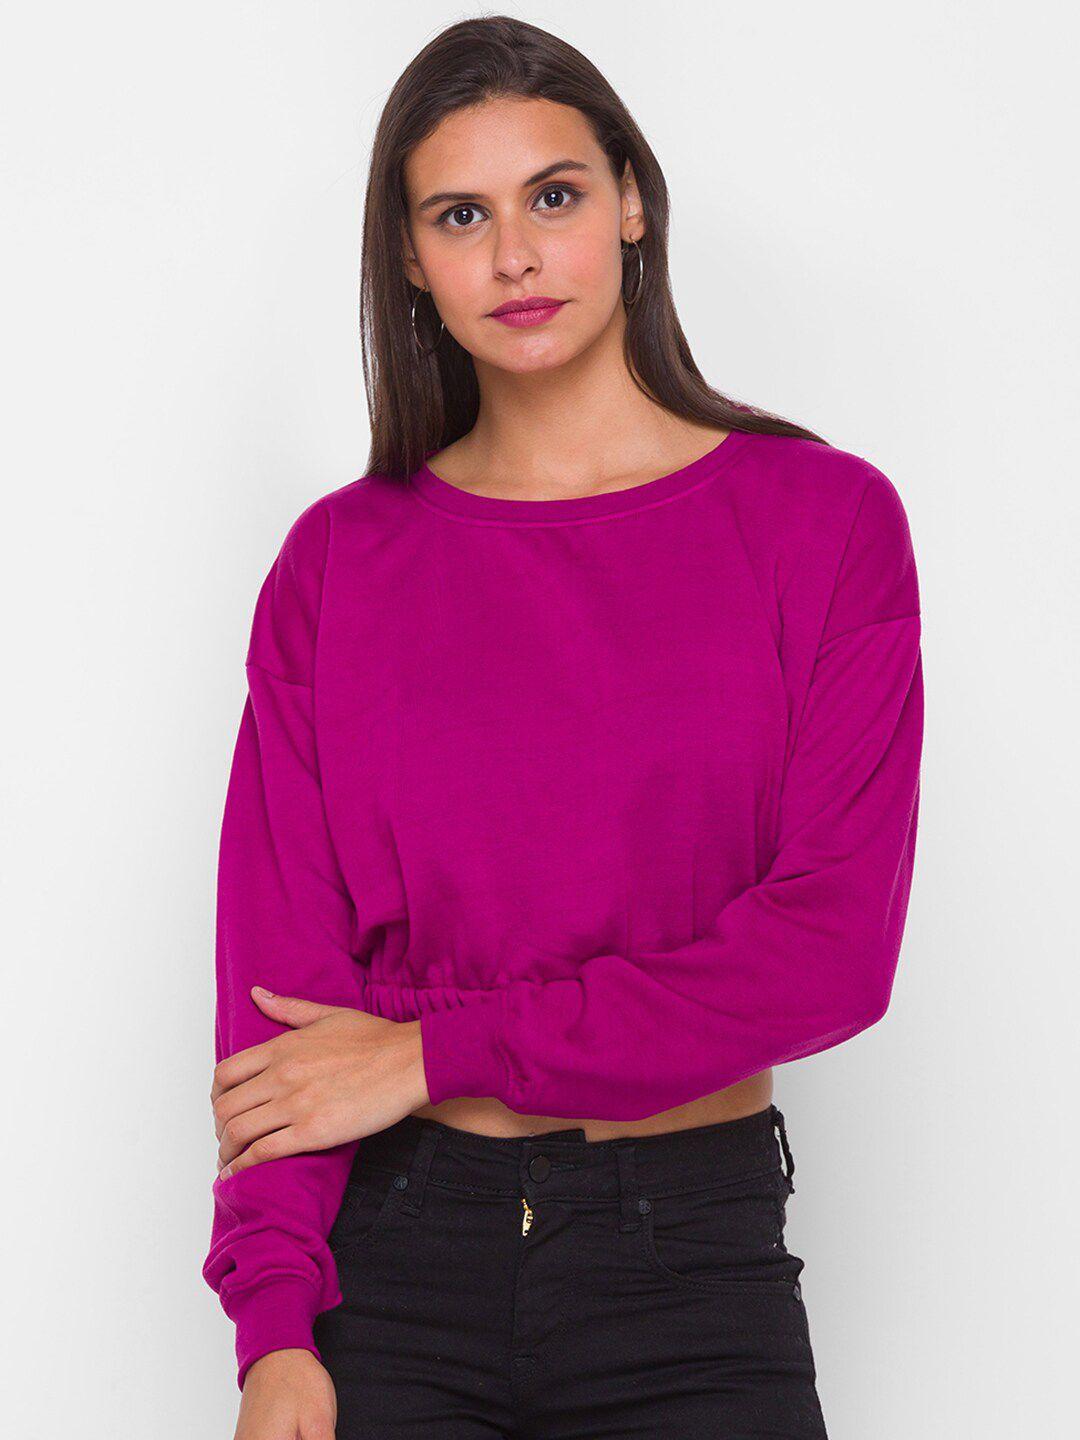 globus women purple sweatshirt